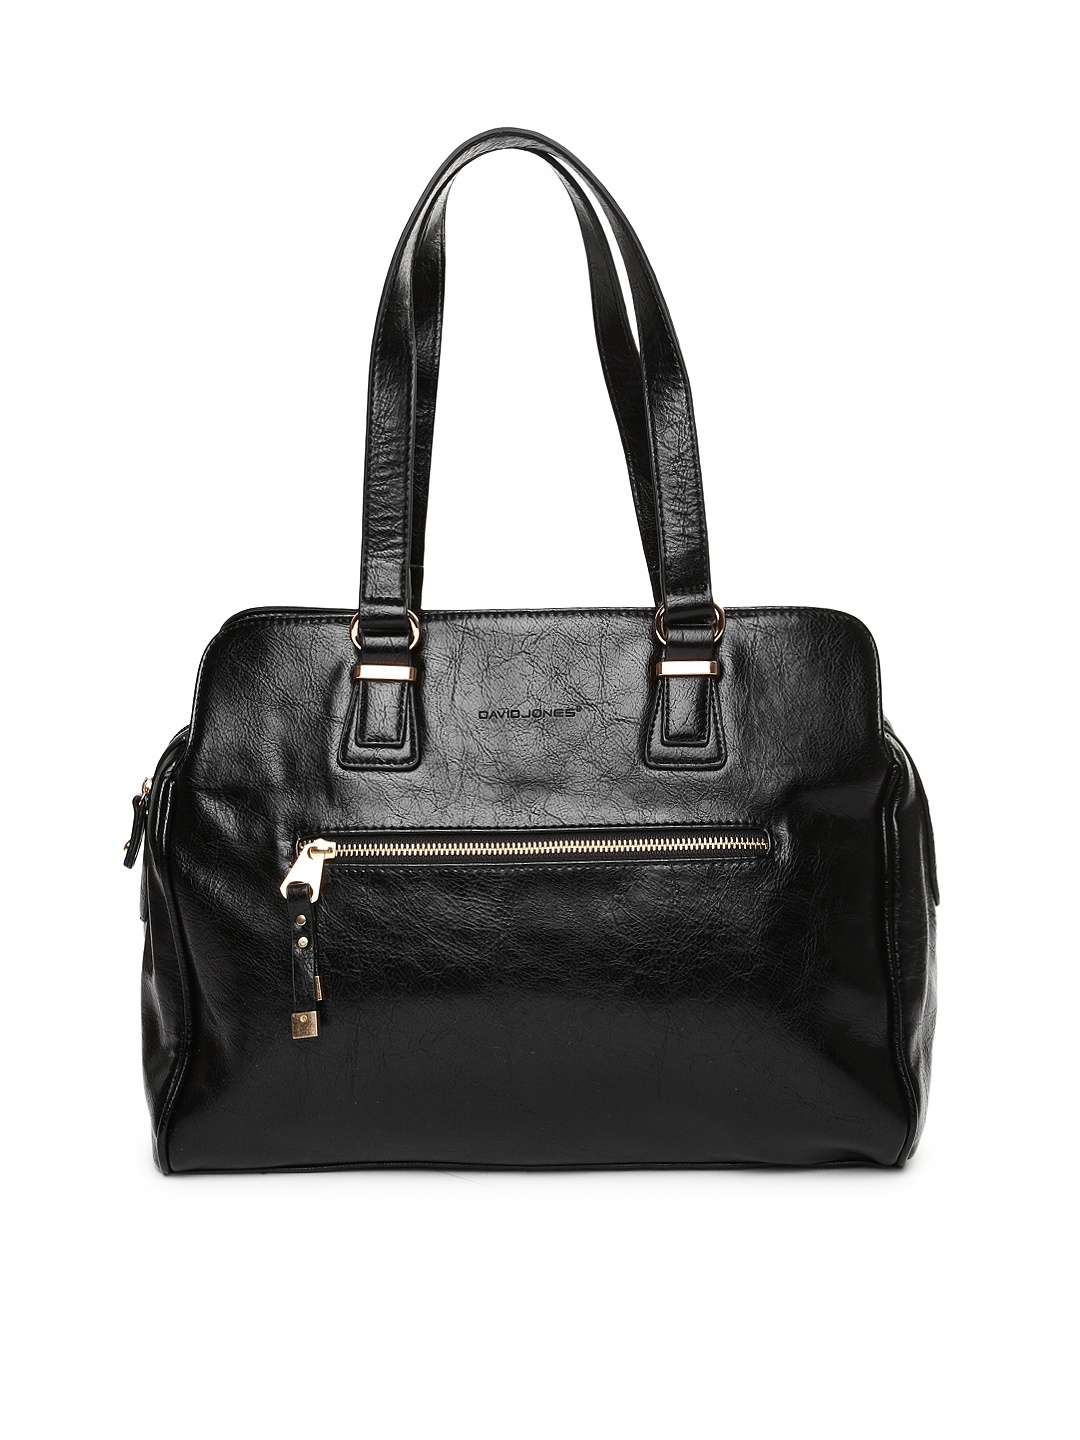 Myntra David Jones Black Handbag 750215 | Buy Myntra David Jones ...